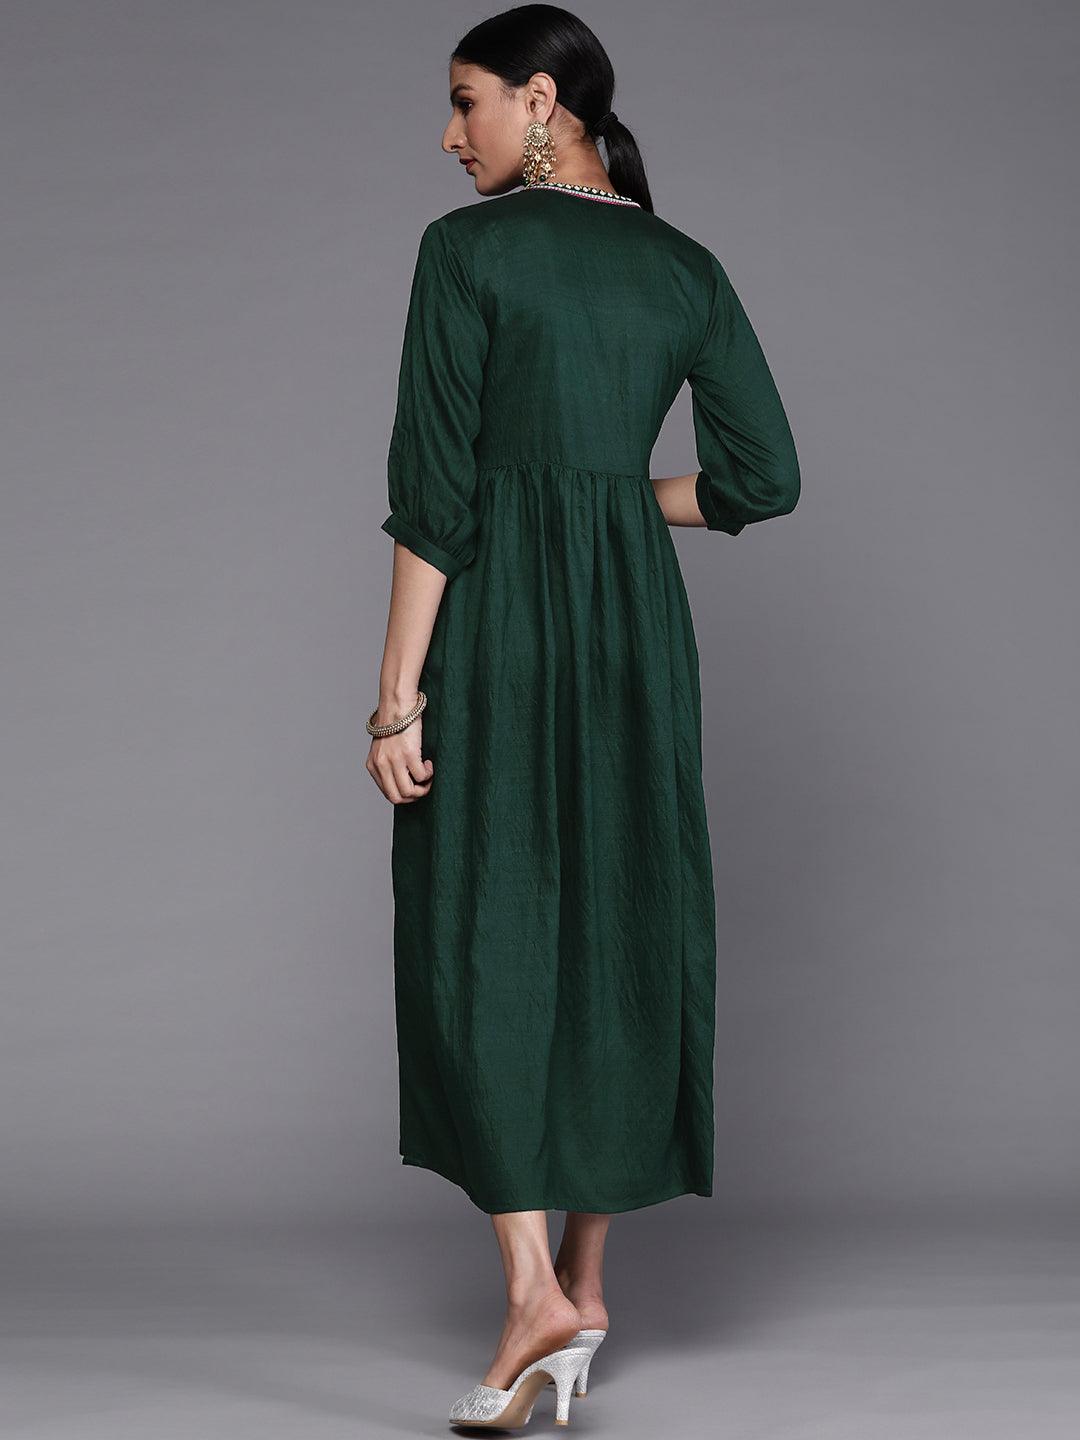 Green Embroidered Viscose Rayon Dress